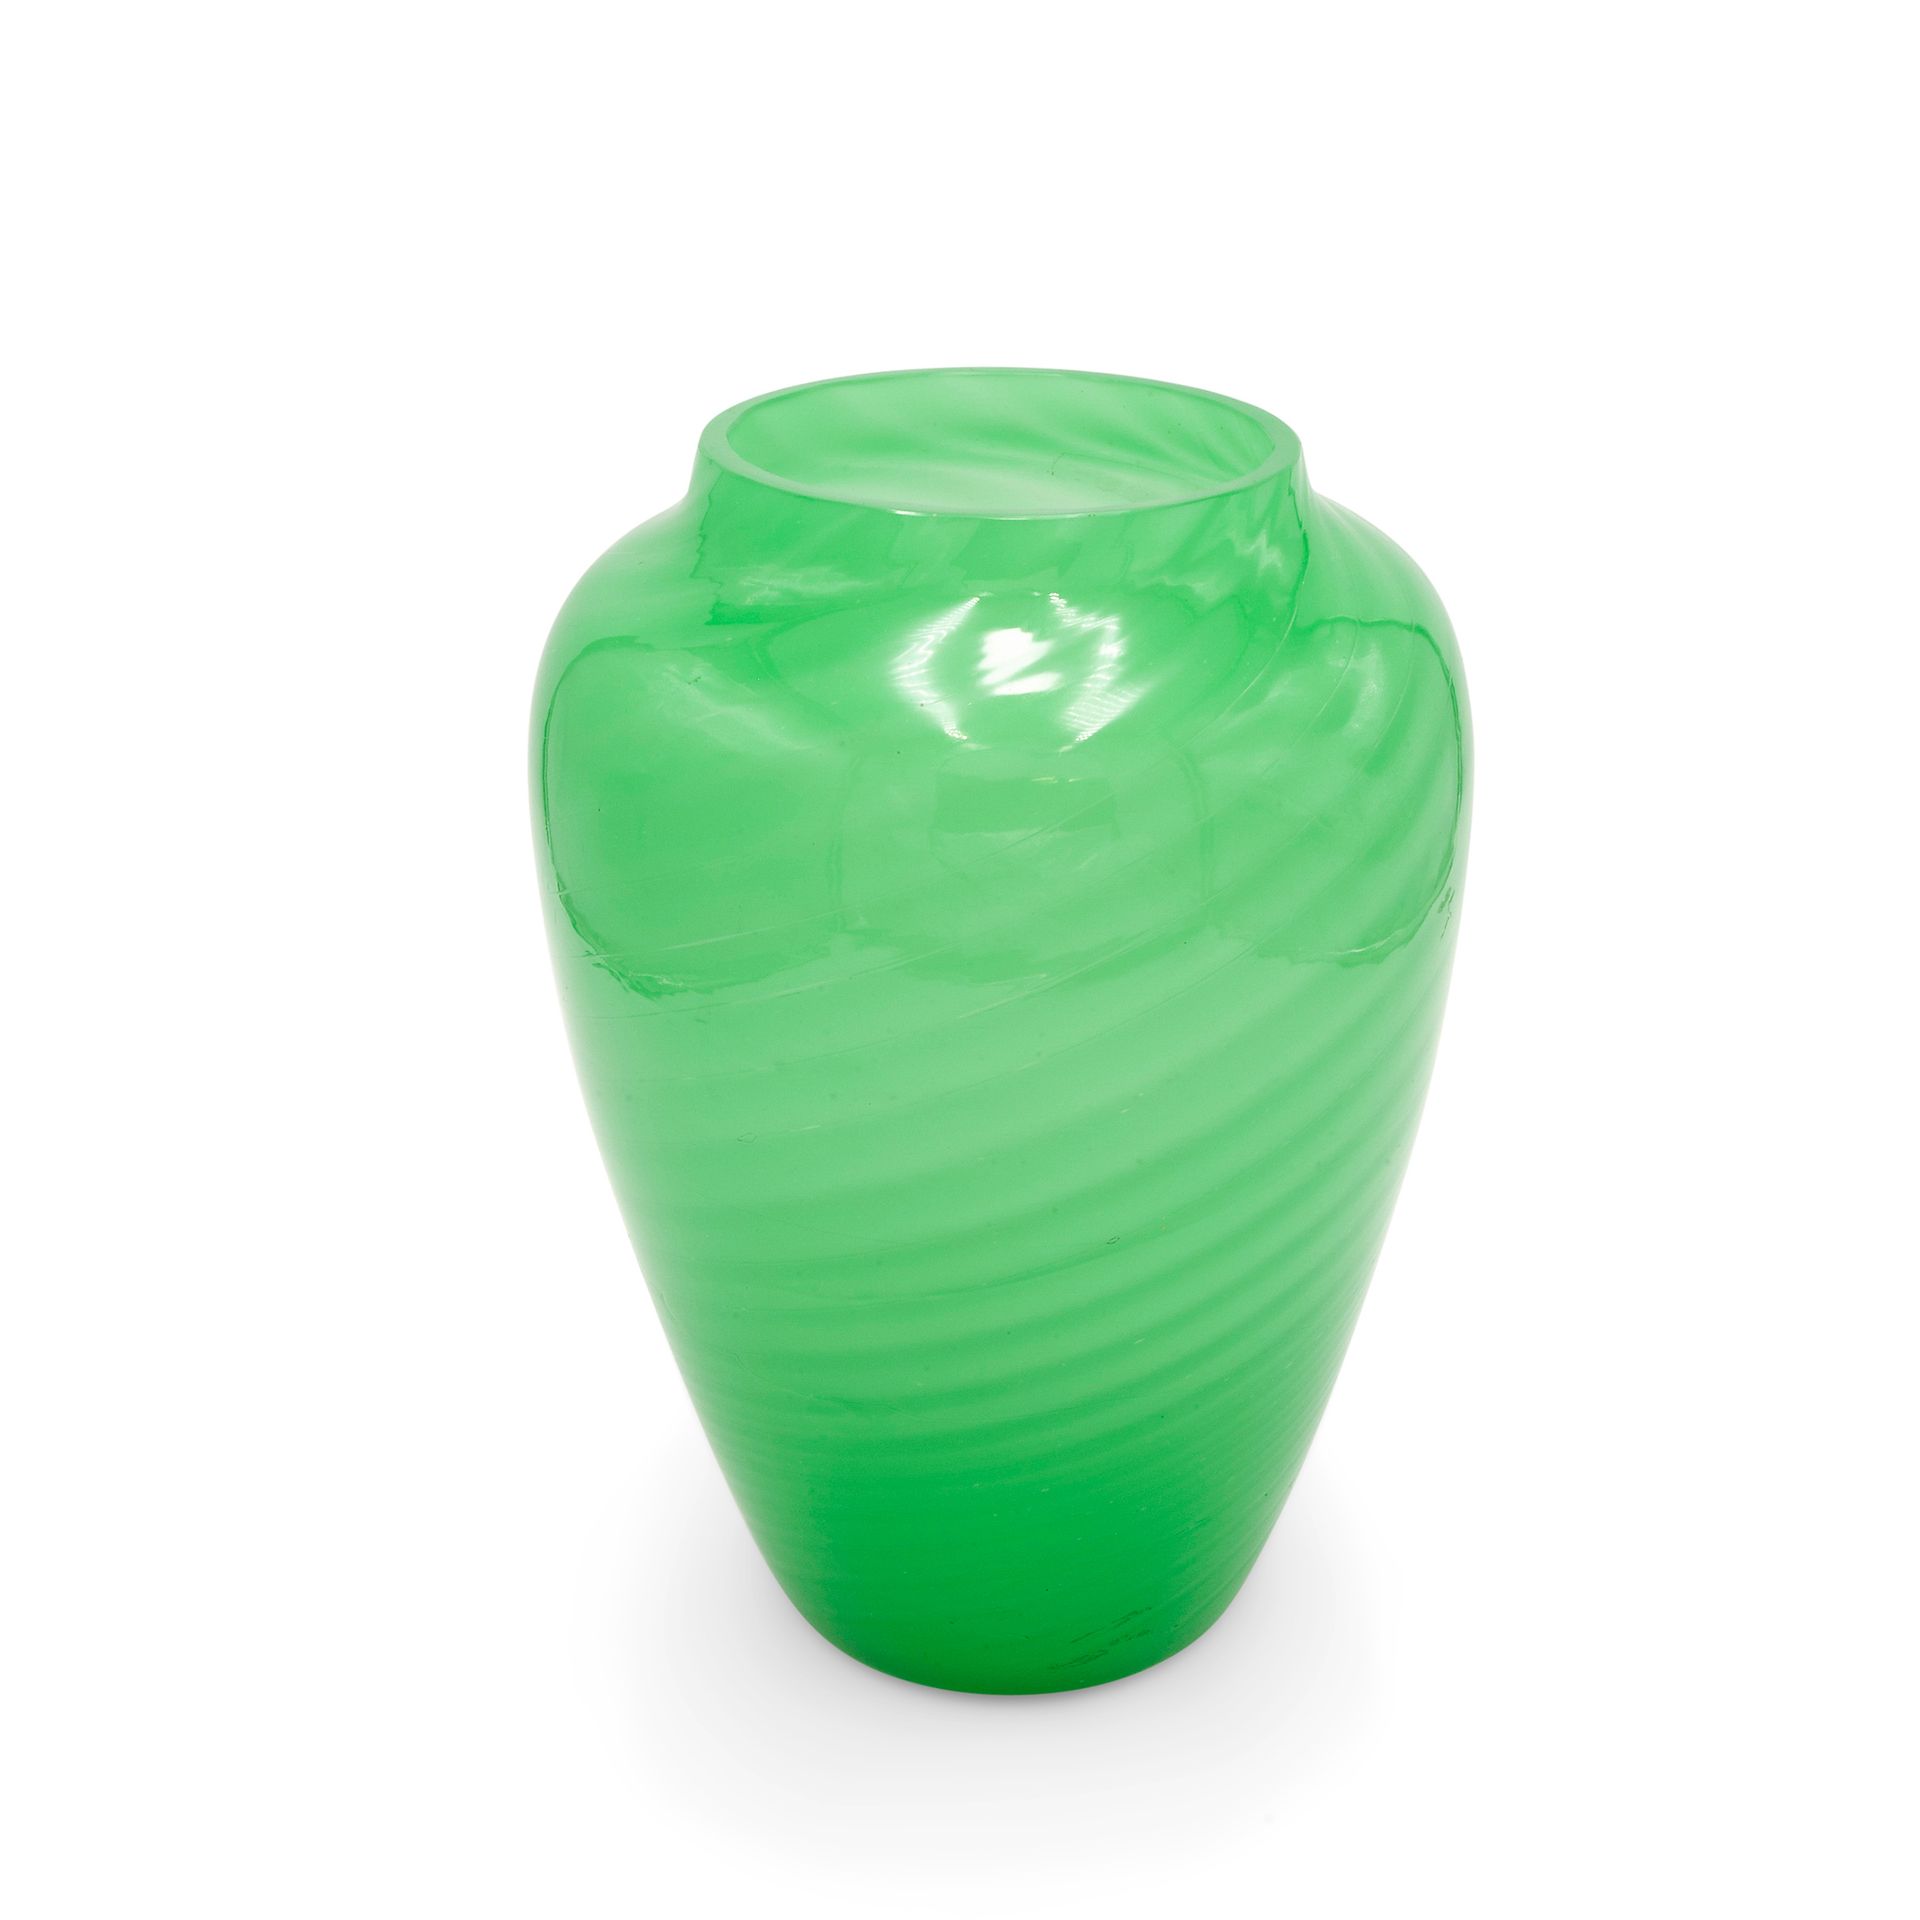 Large green vase, circa 1970 完全由玻璃制成 尺寸为11x7.8x7.8英寸。